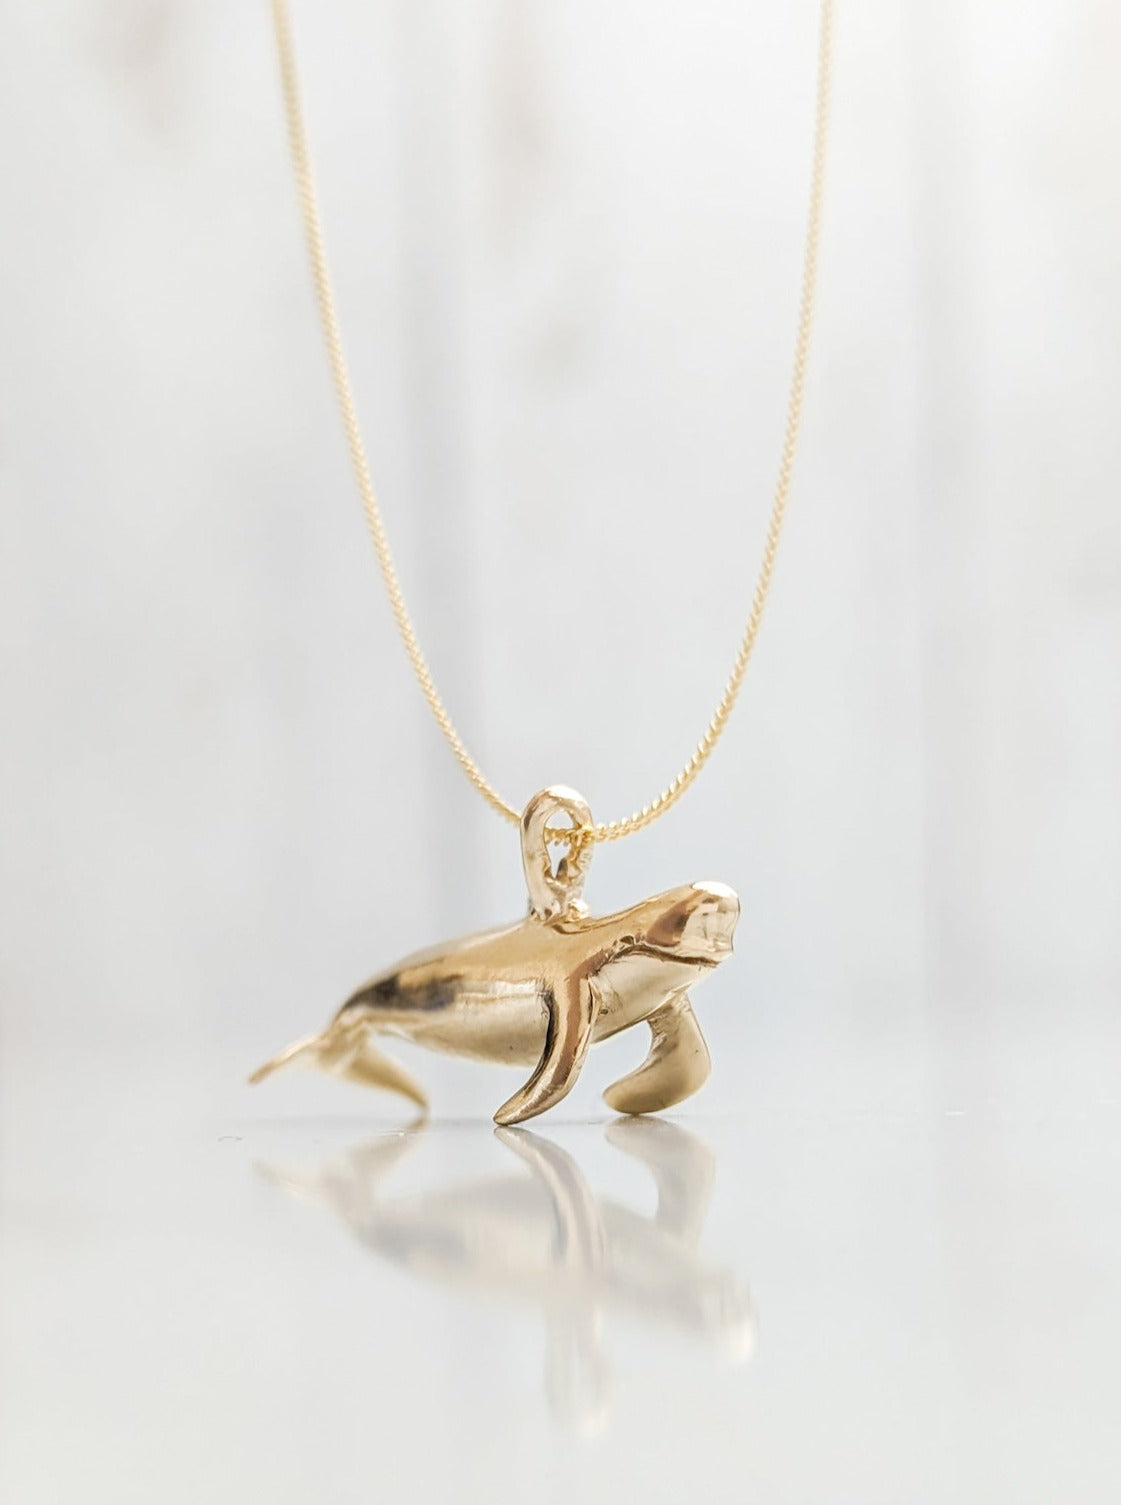 Solid gold pilot whale necklace